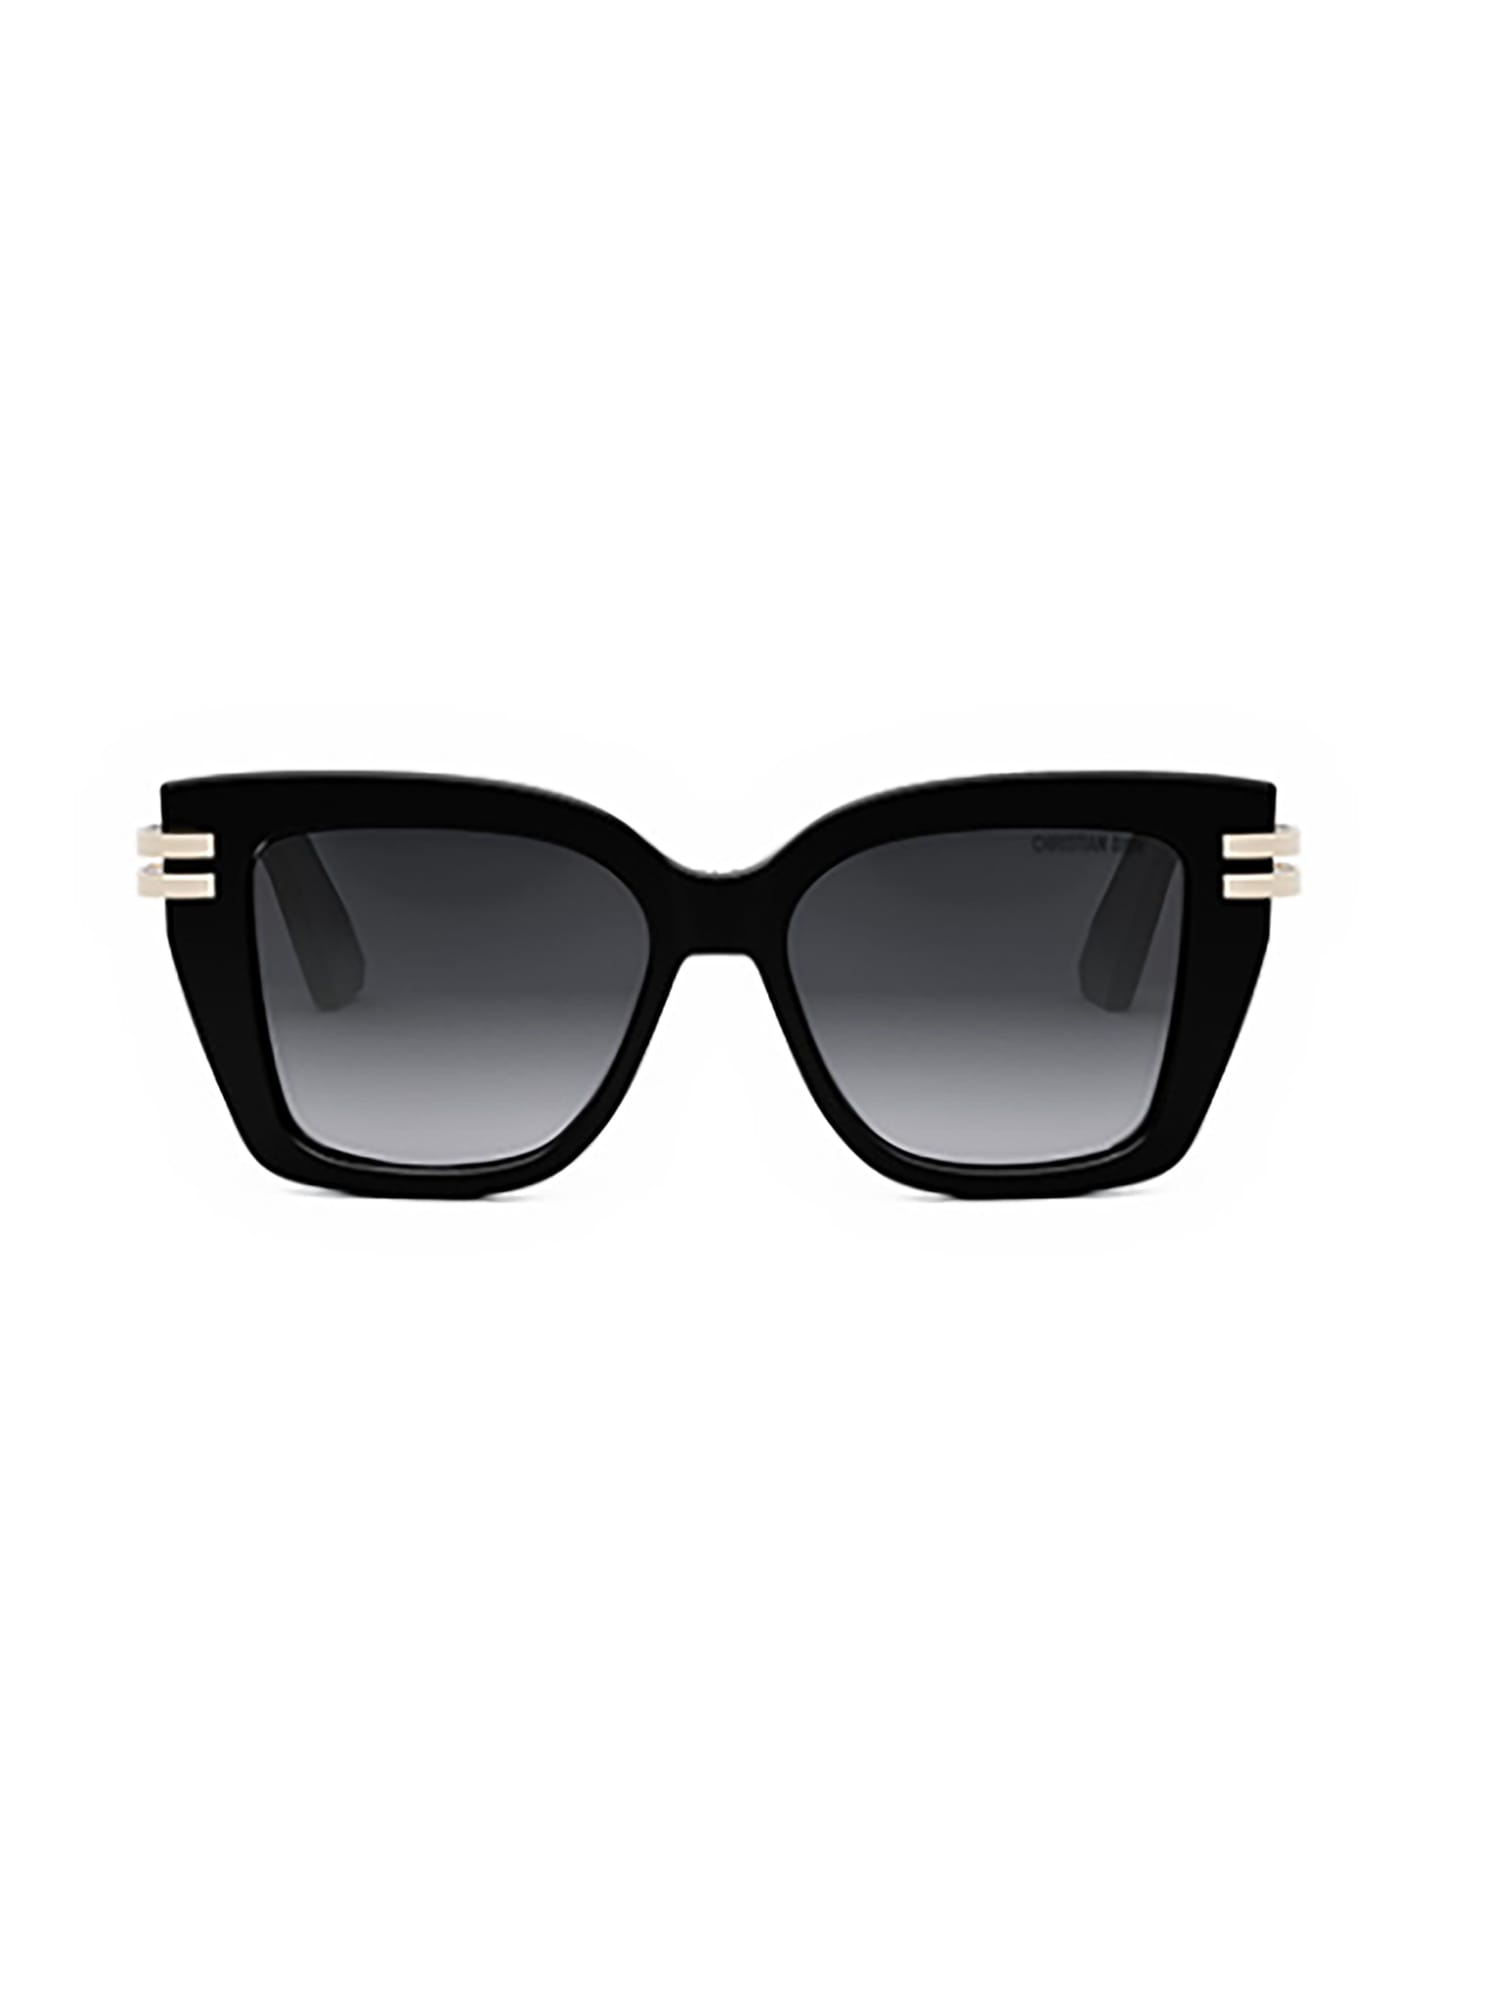 Dior C S1i Sunglasses In Black